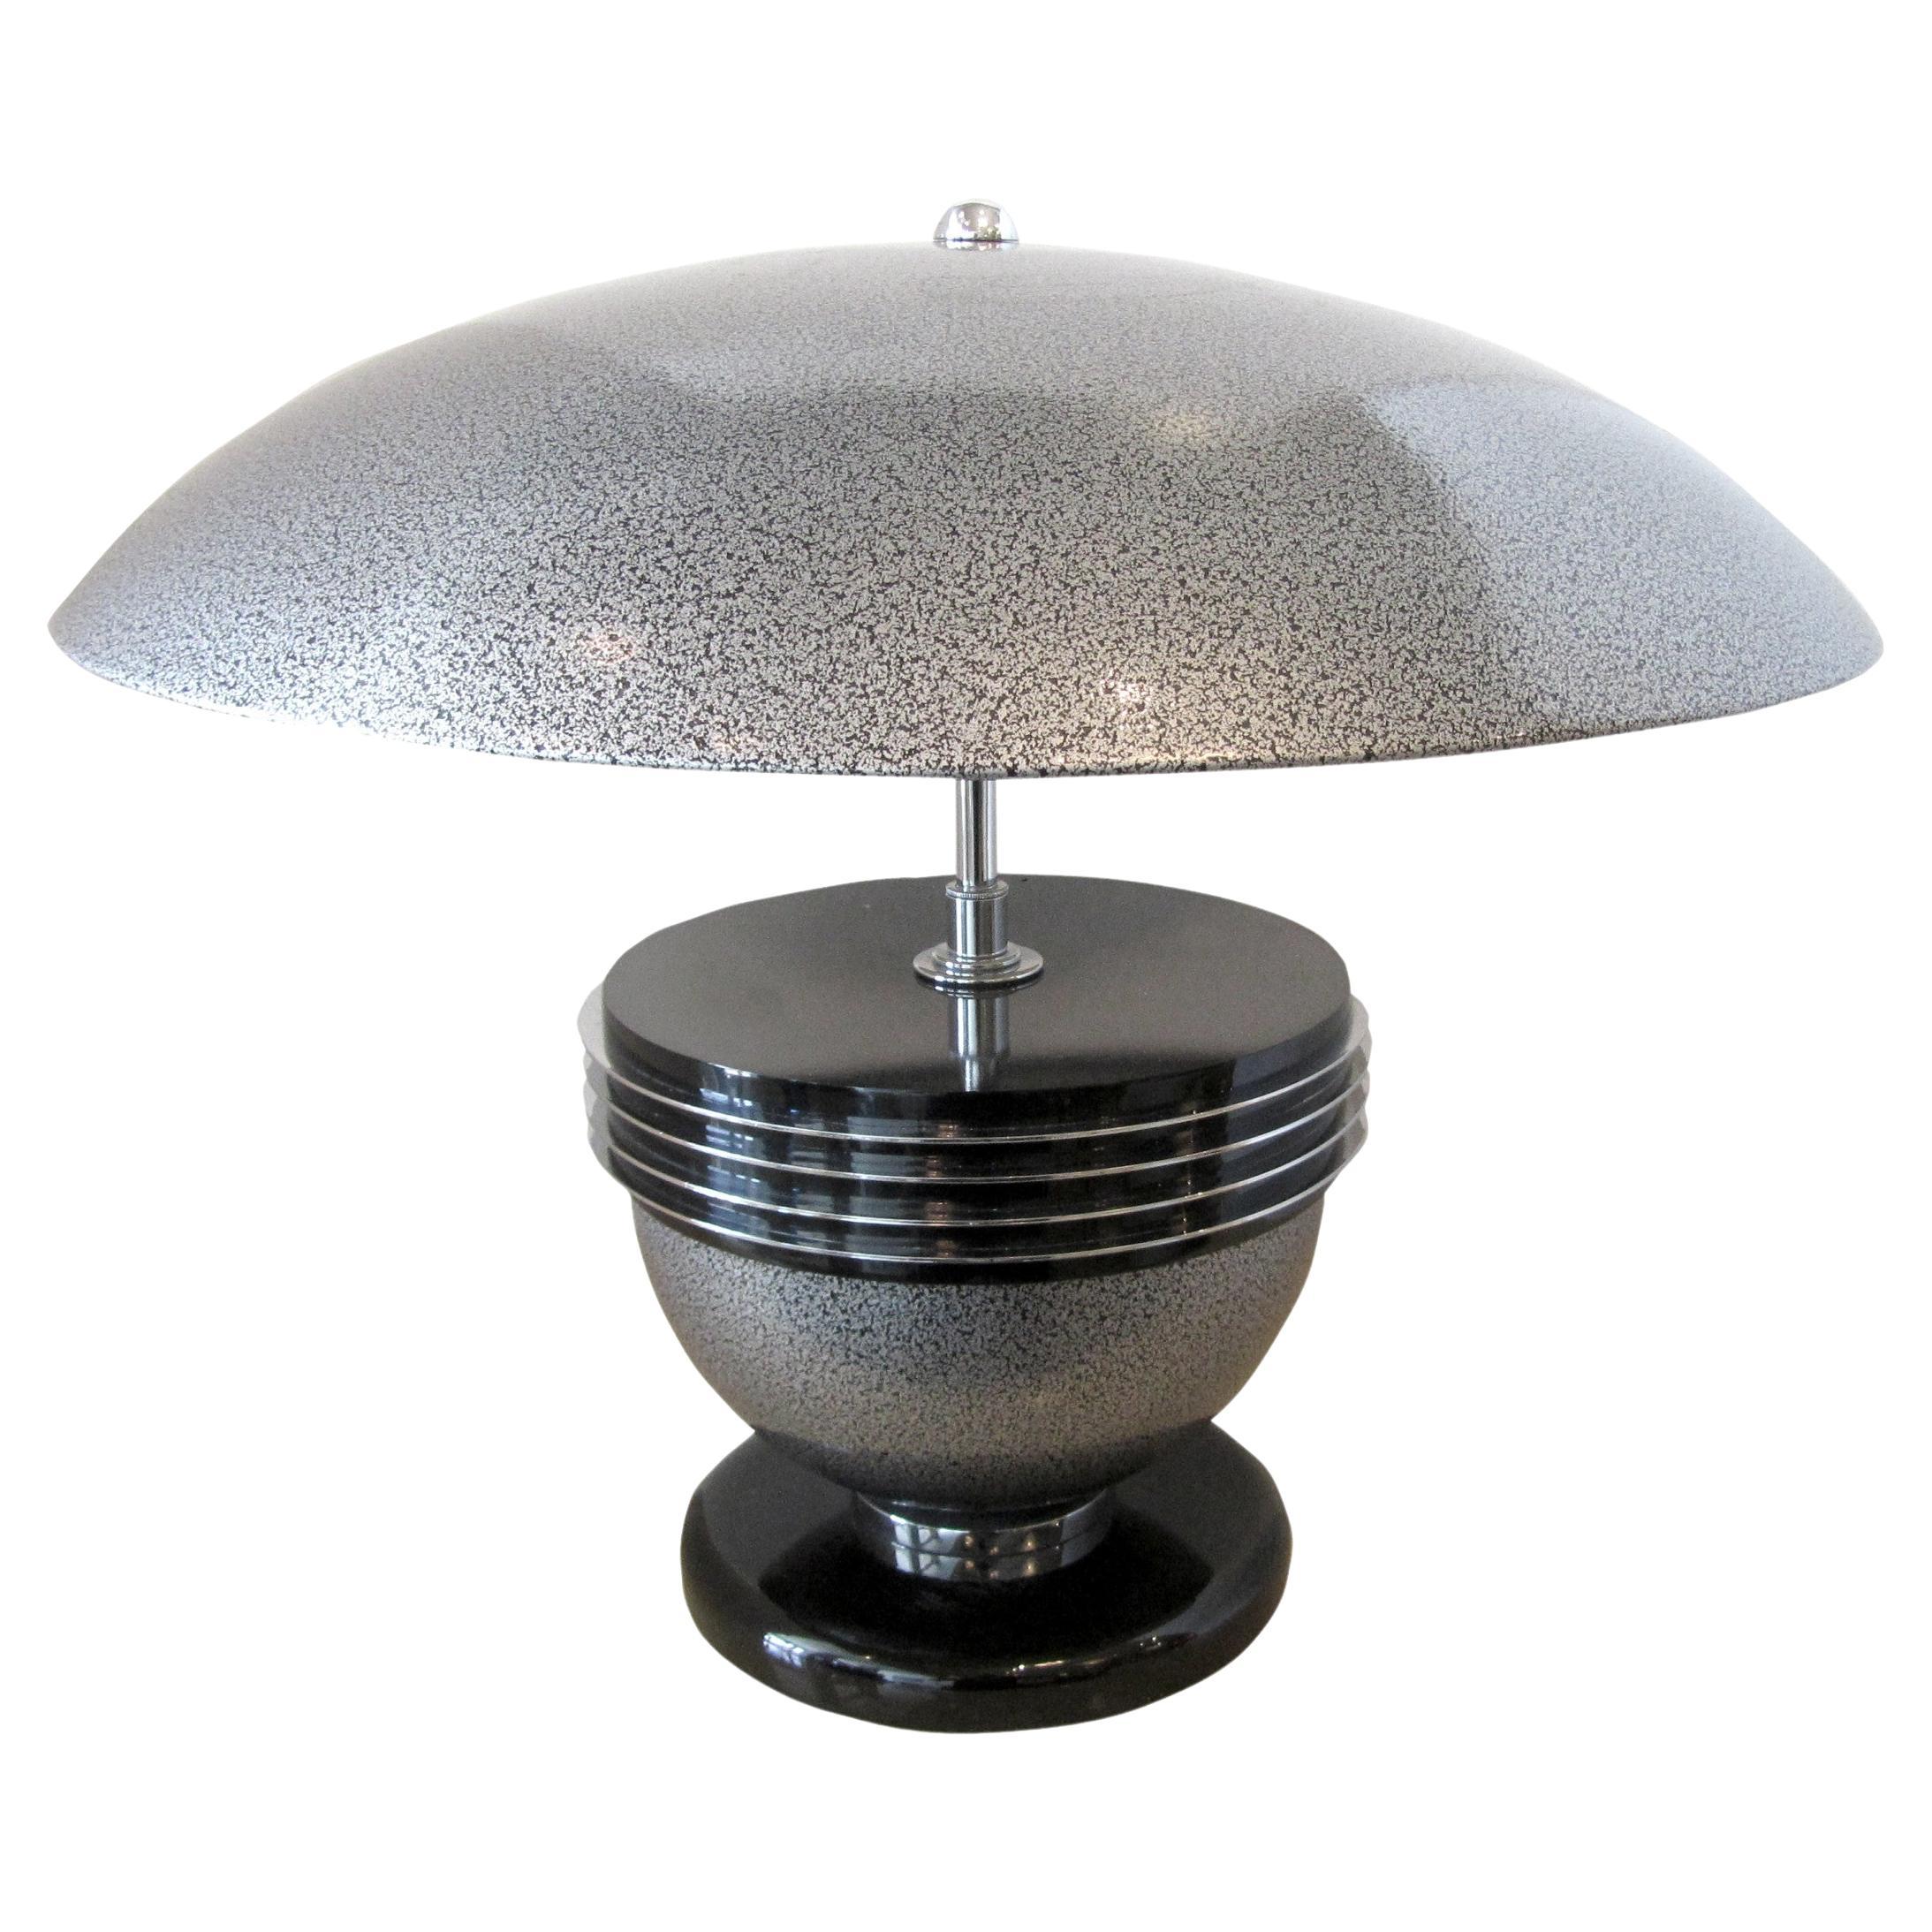 Walter Prosper Midcentury American Modern Table Lamp For Sale